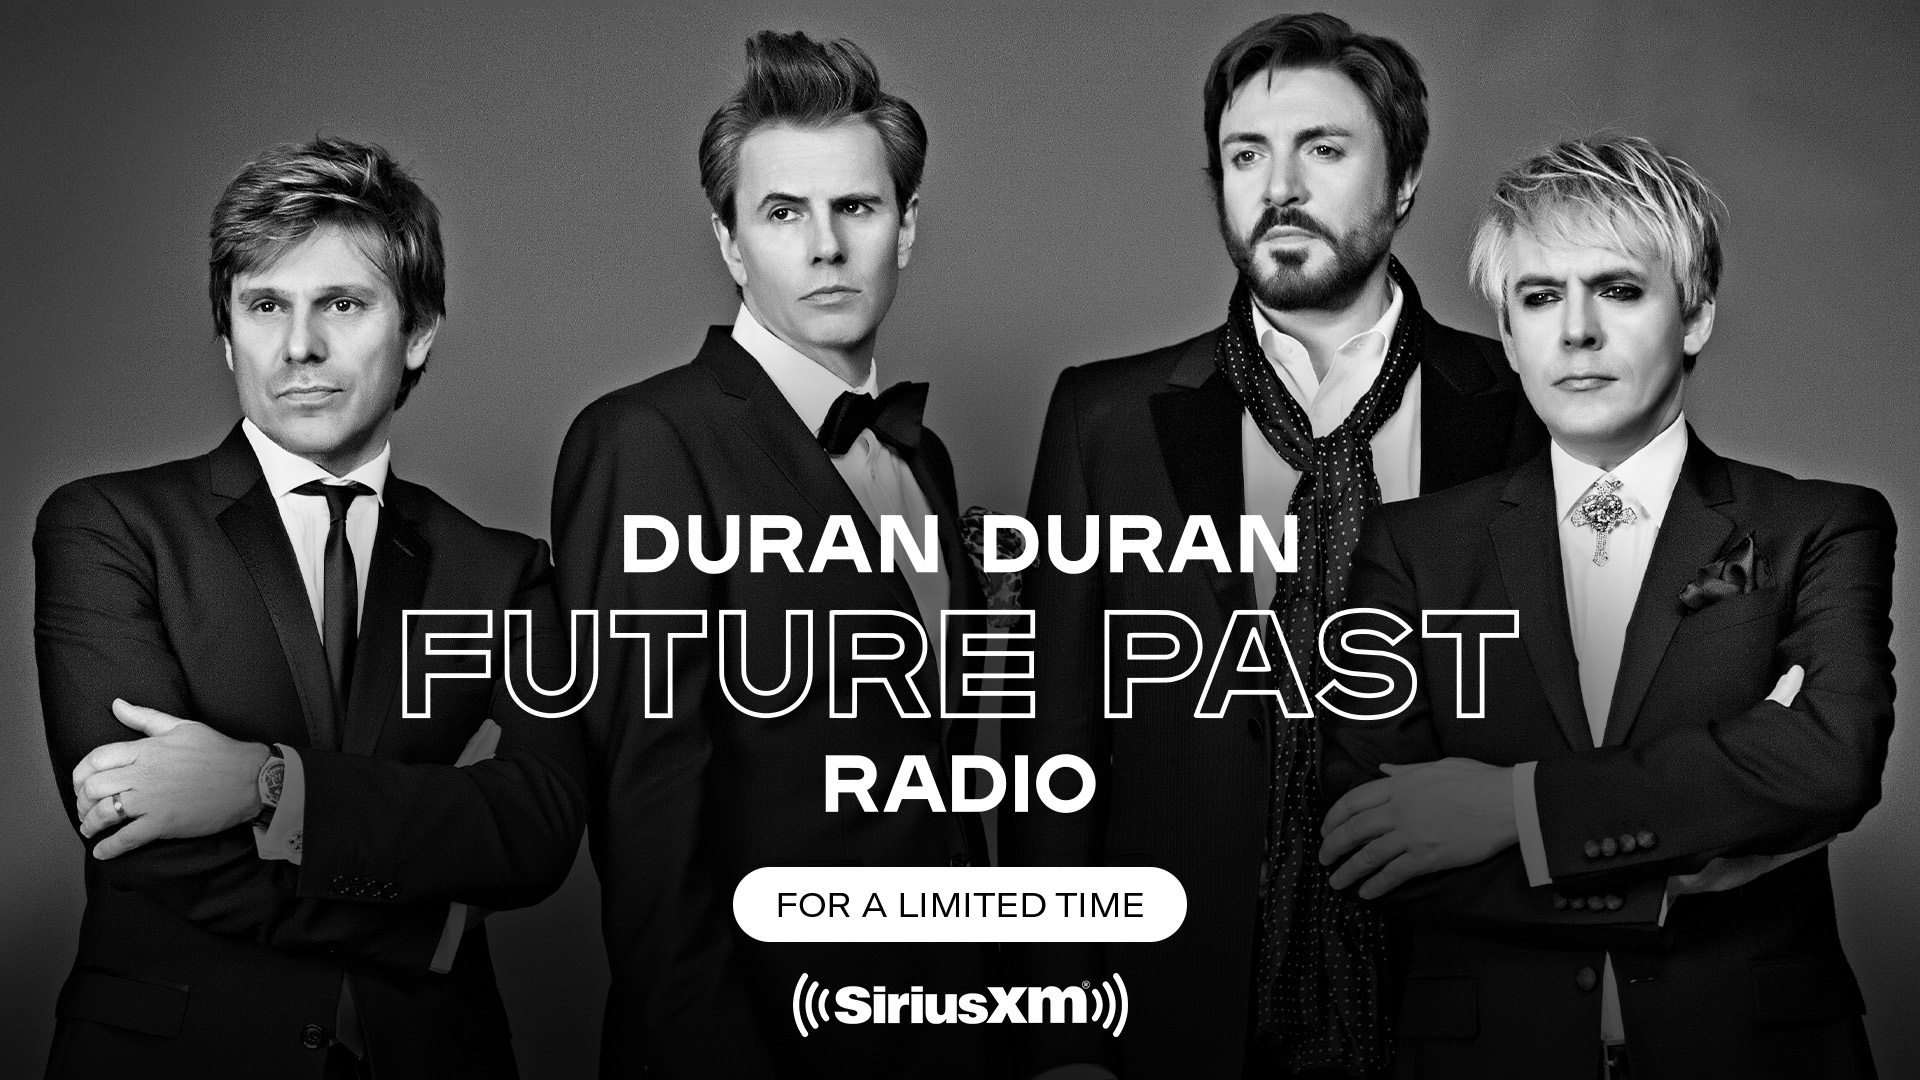 Duran Duran FUTURE PAST Radio on SiriusXM